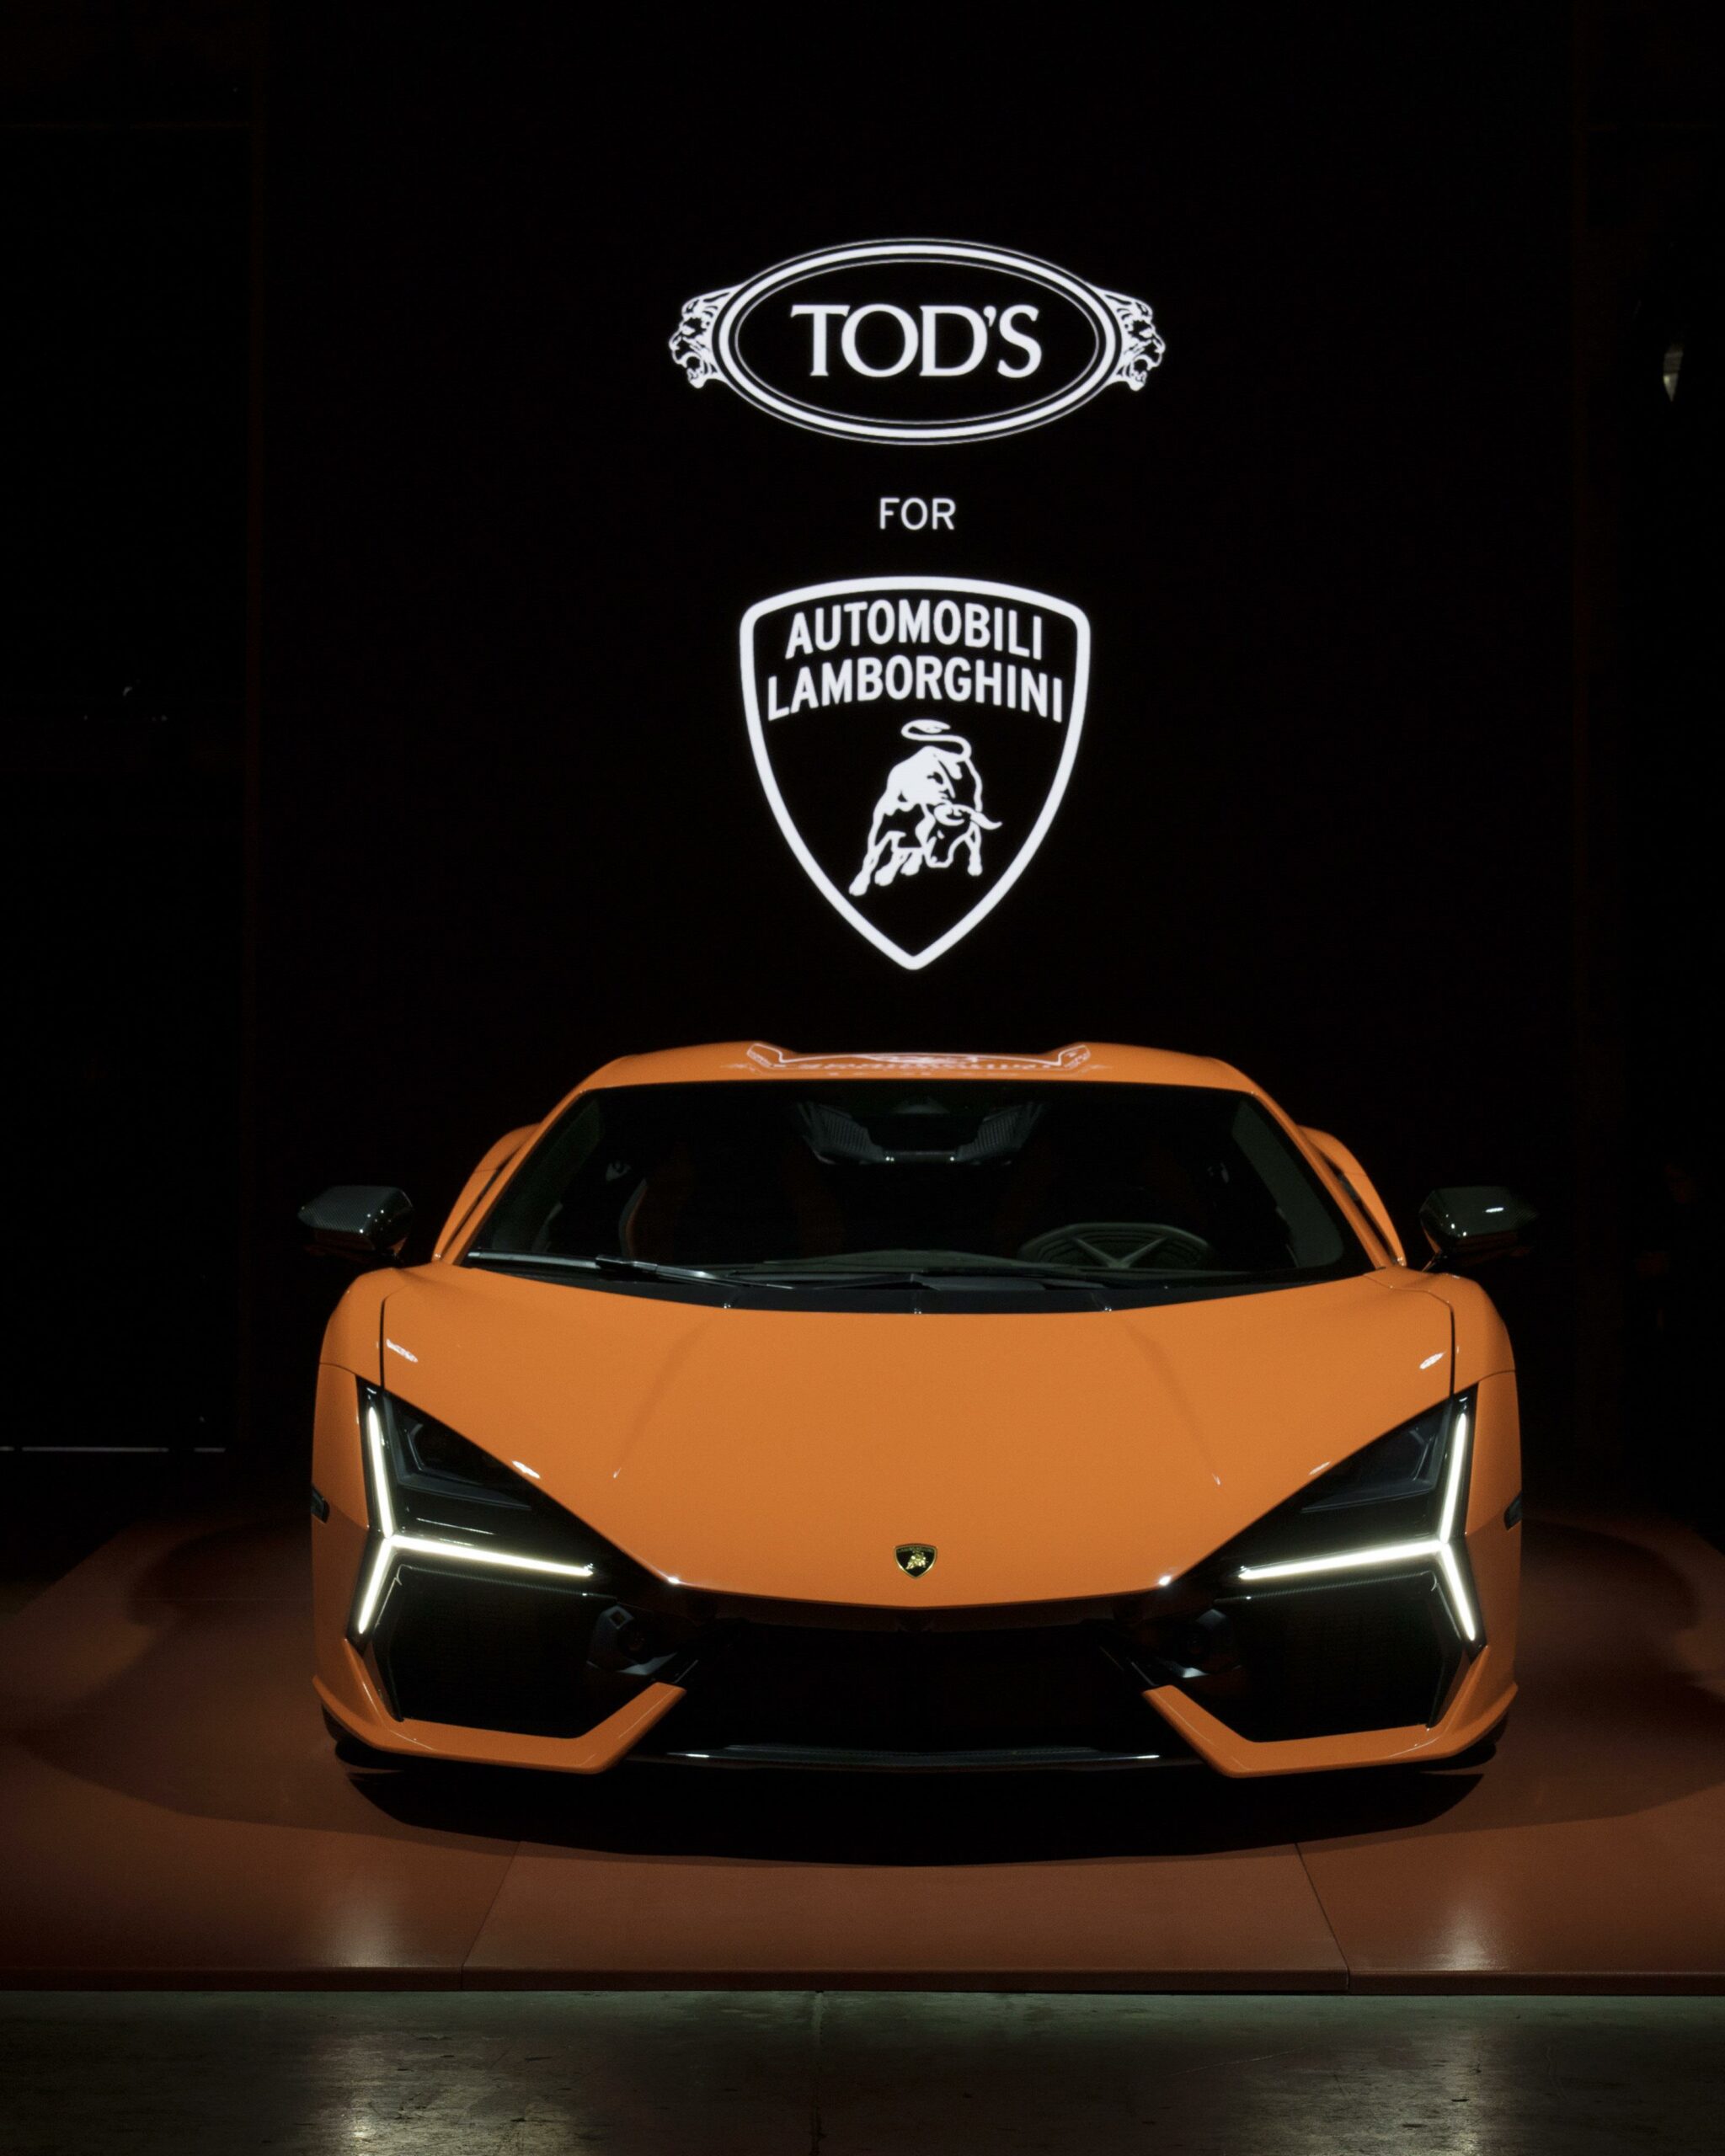 Tod’s for Automobili Lamborghini